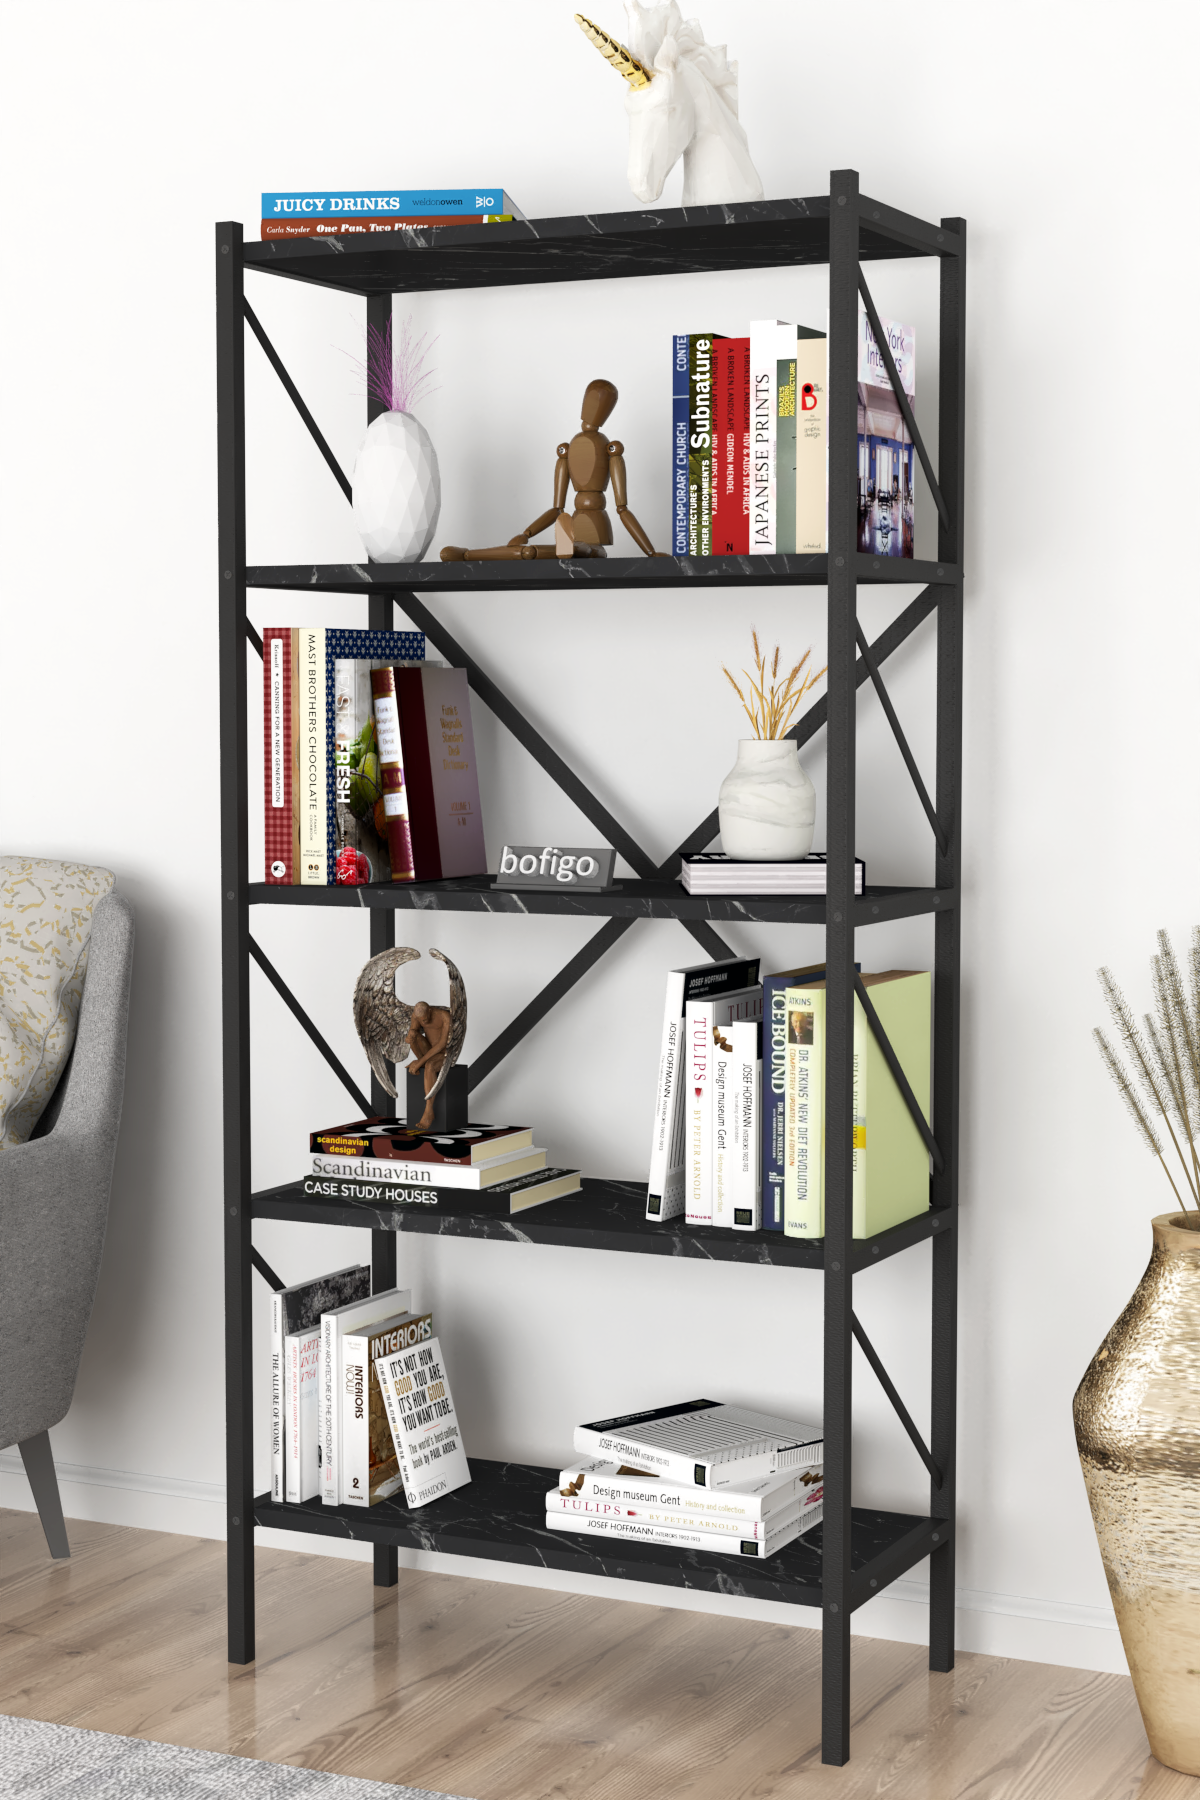 Bofigo Decorative 5 Shelf Bookcase Metal Bookcase Bendir